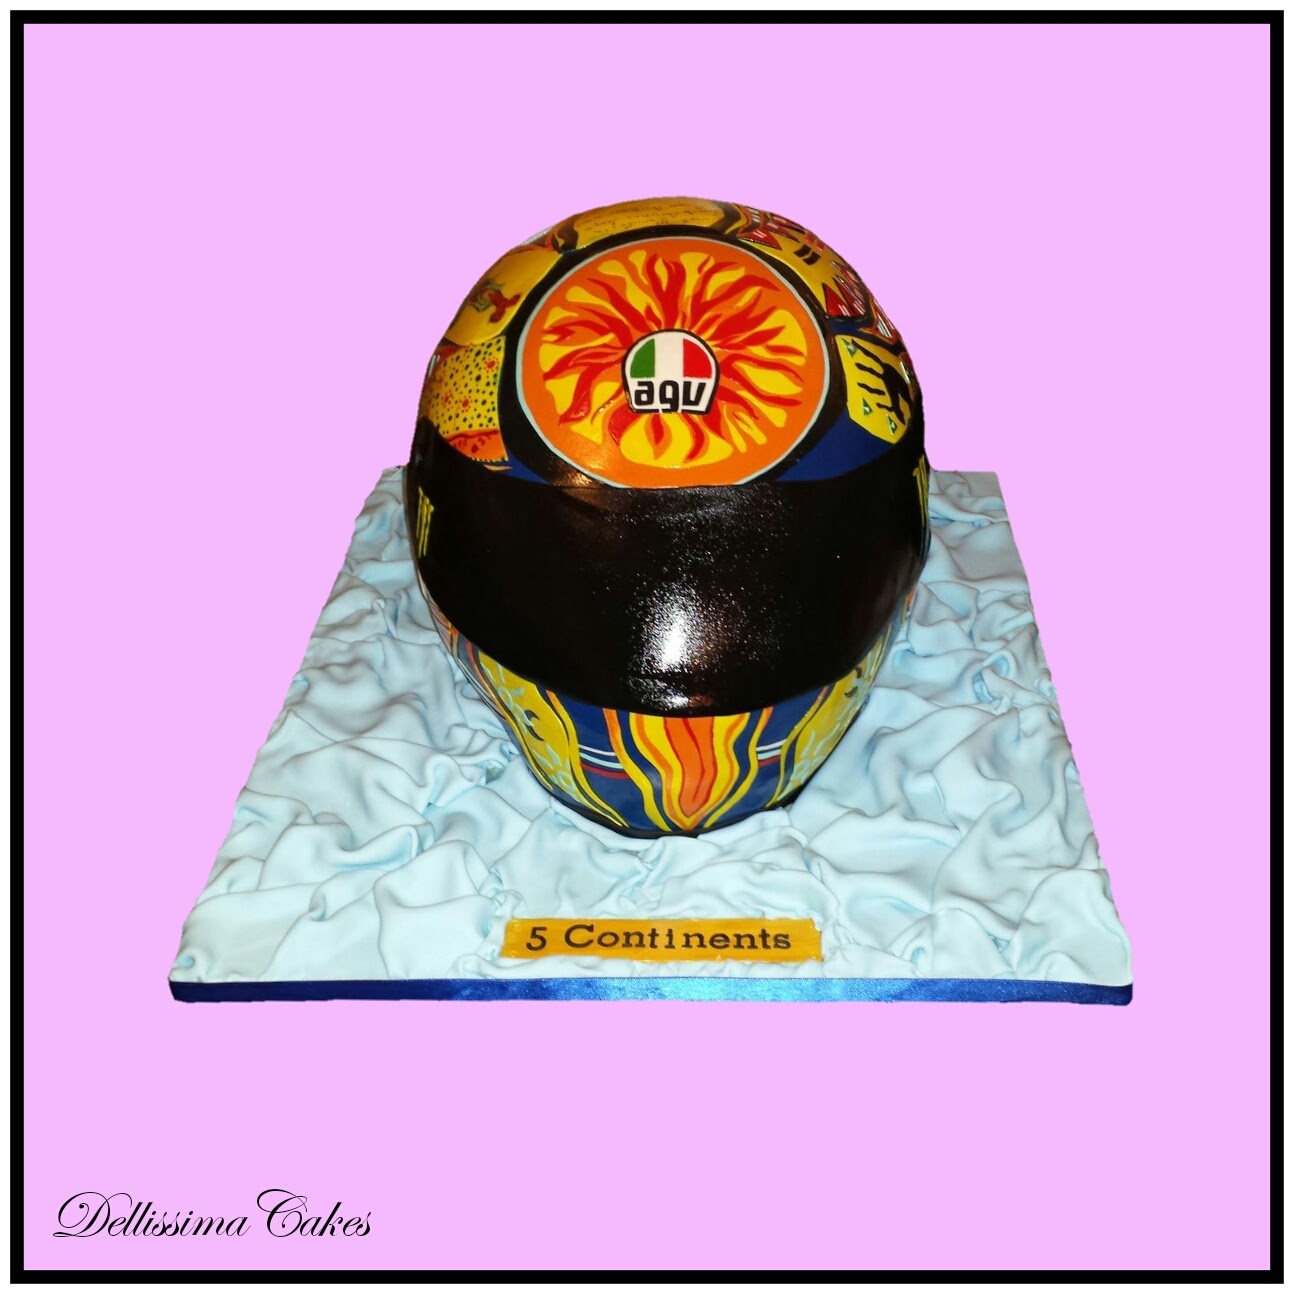 Valentino Rossi Helmet Cake 5-Continents 1.jpg